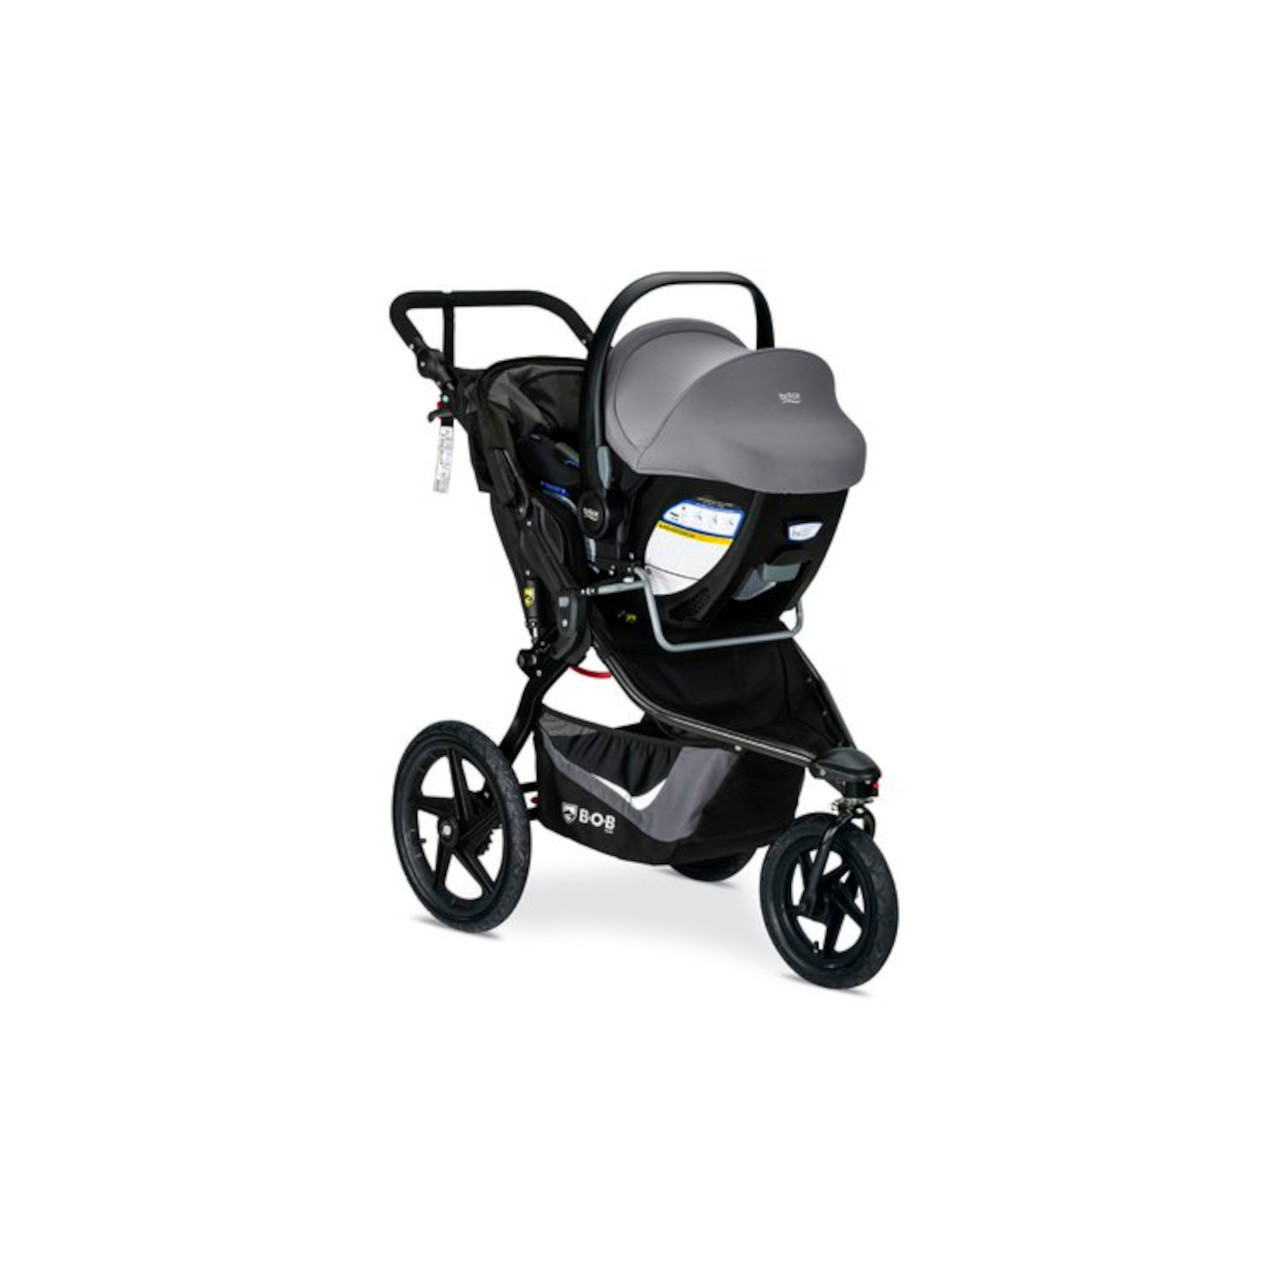 BOB Infant Car Seat Adapter S943900 - Installed on Stroller